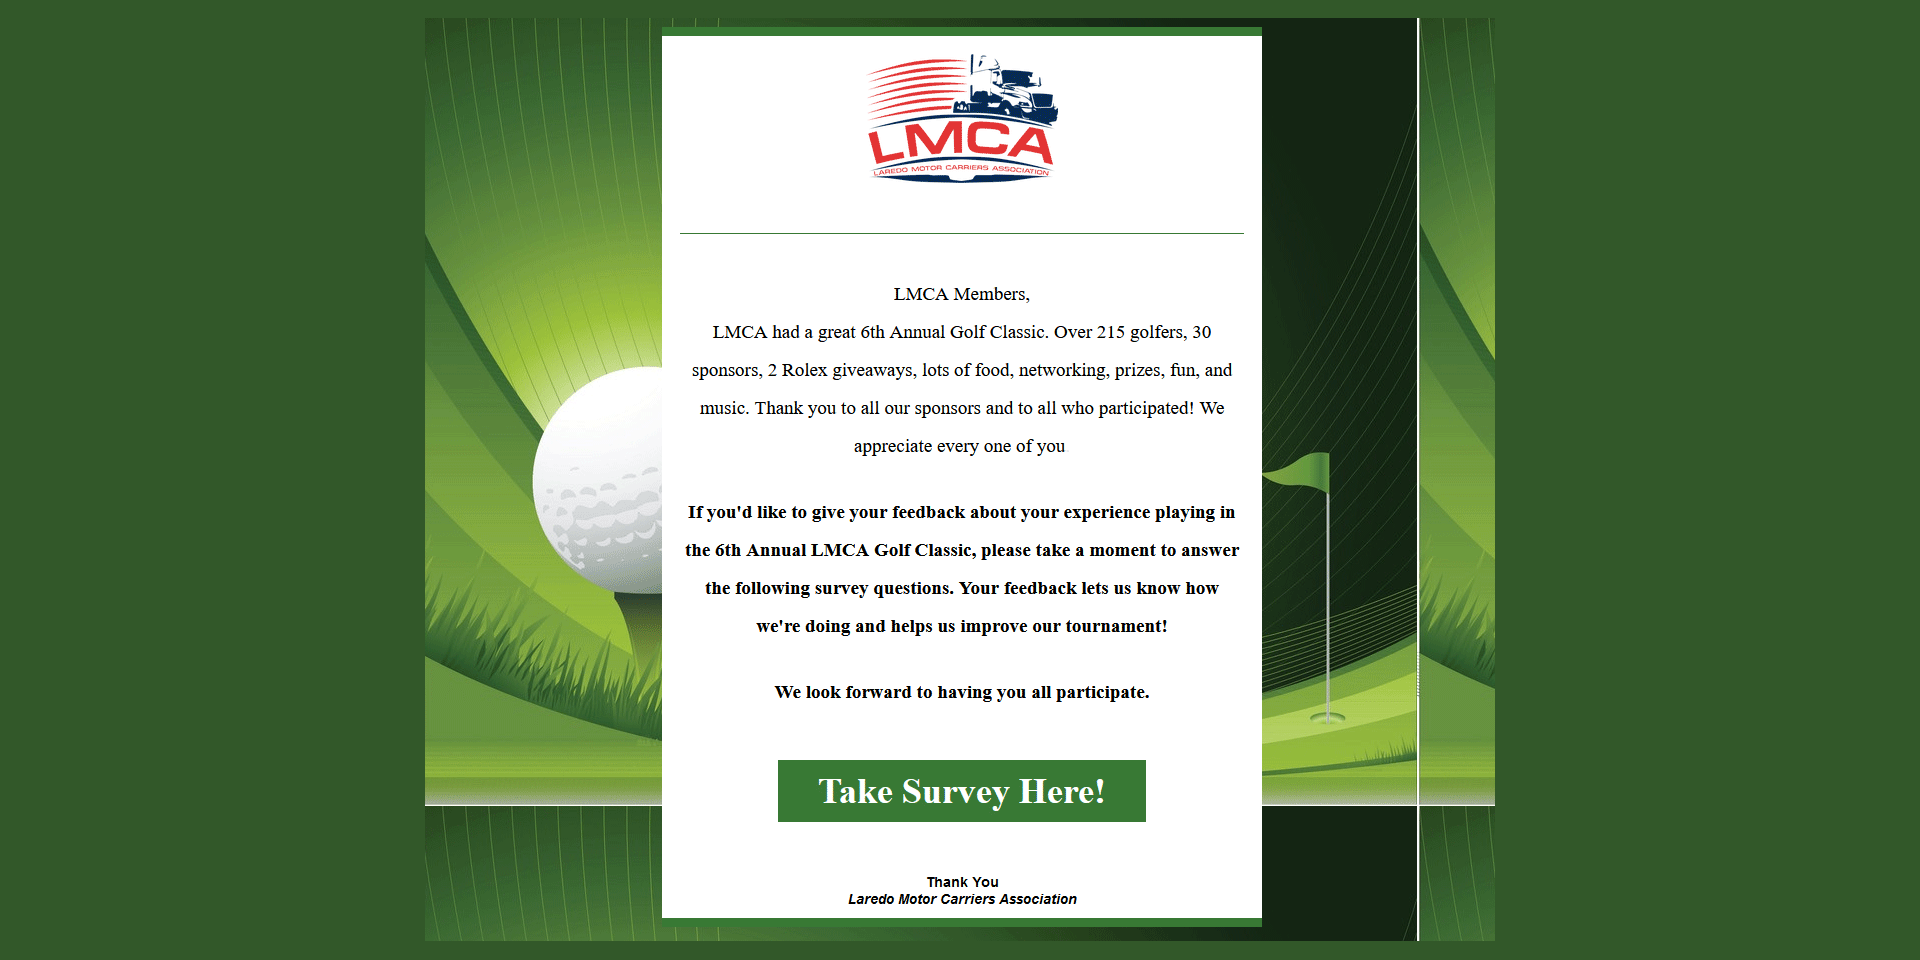 LMCA’s 6th Annual Golf Classic Survey!